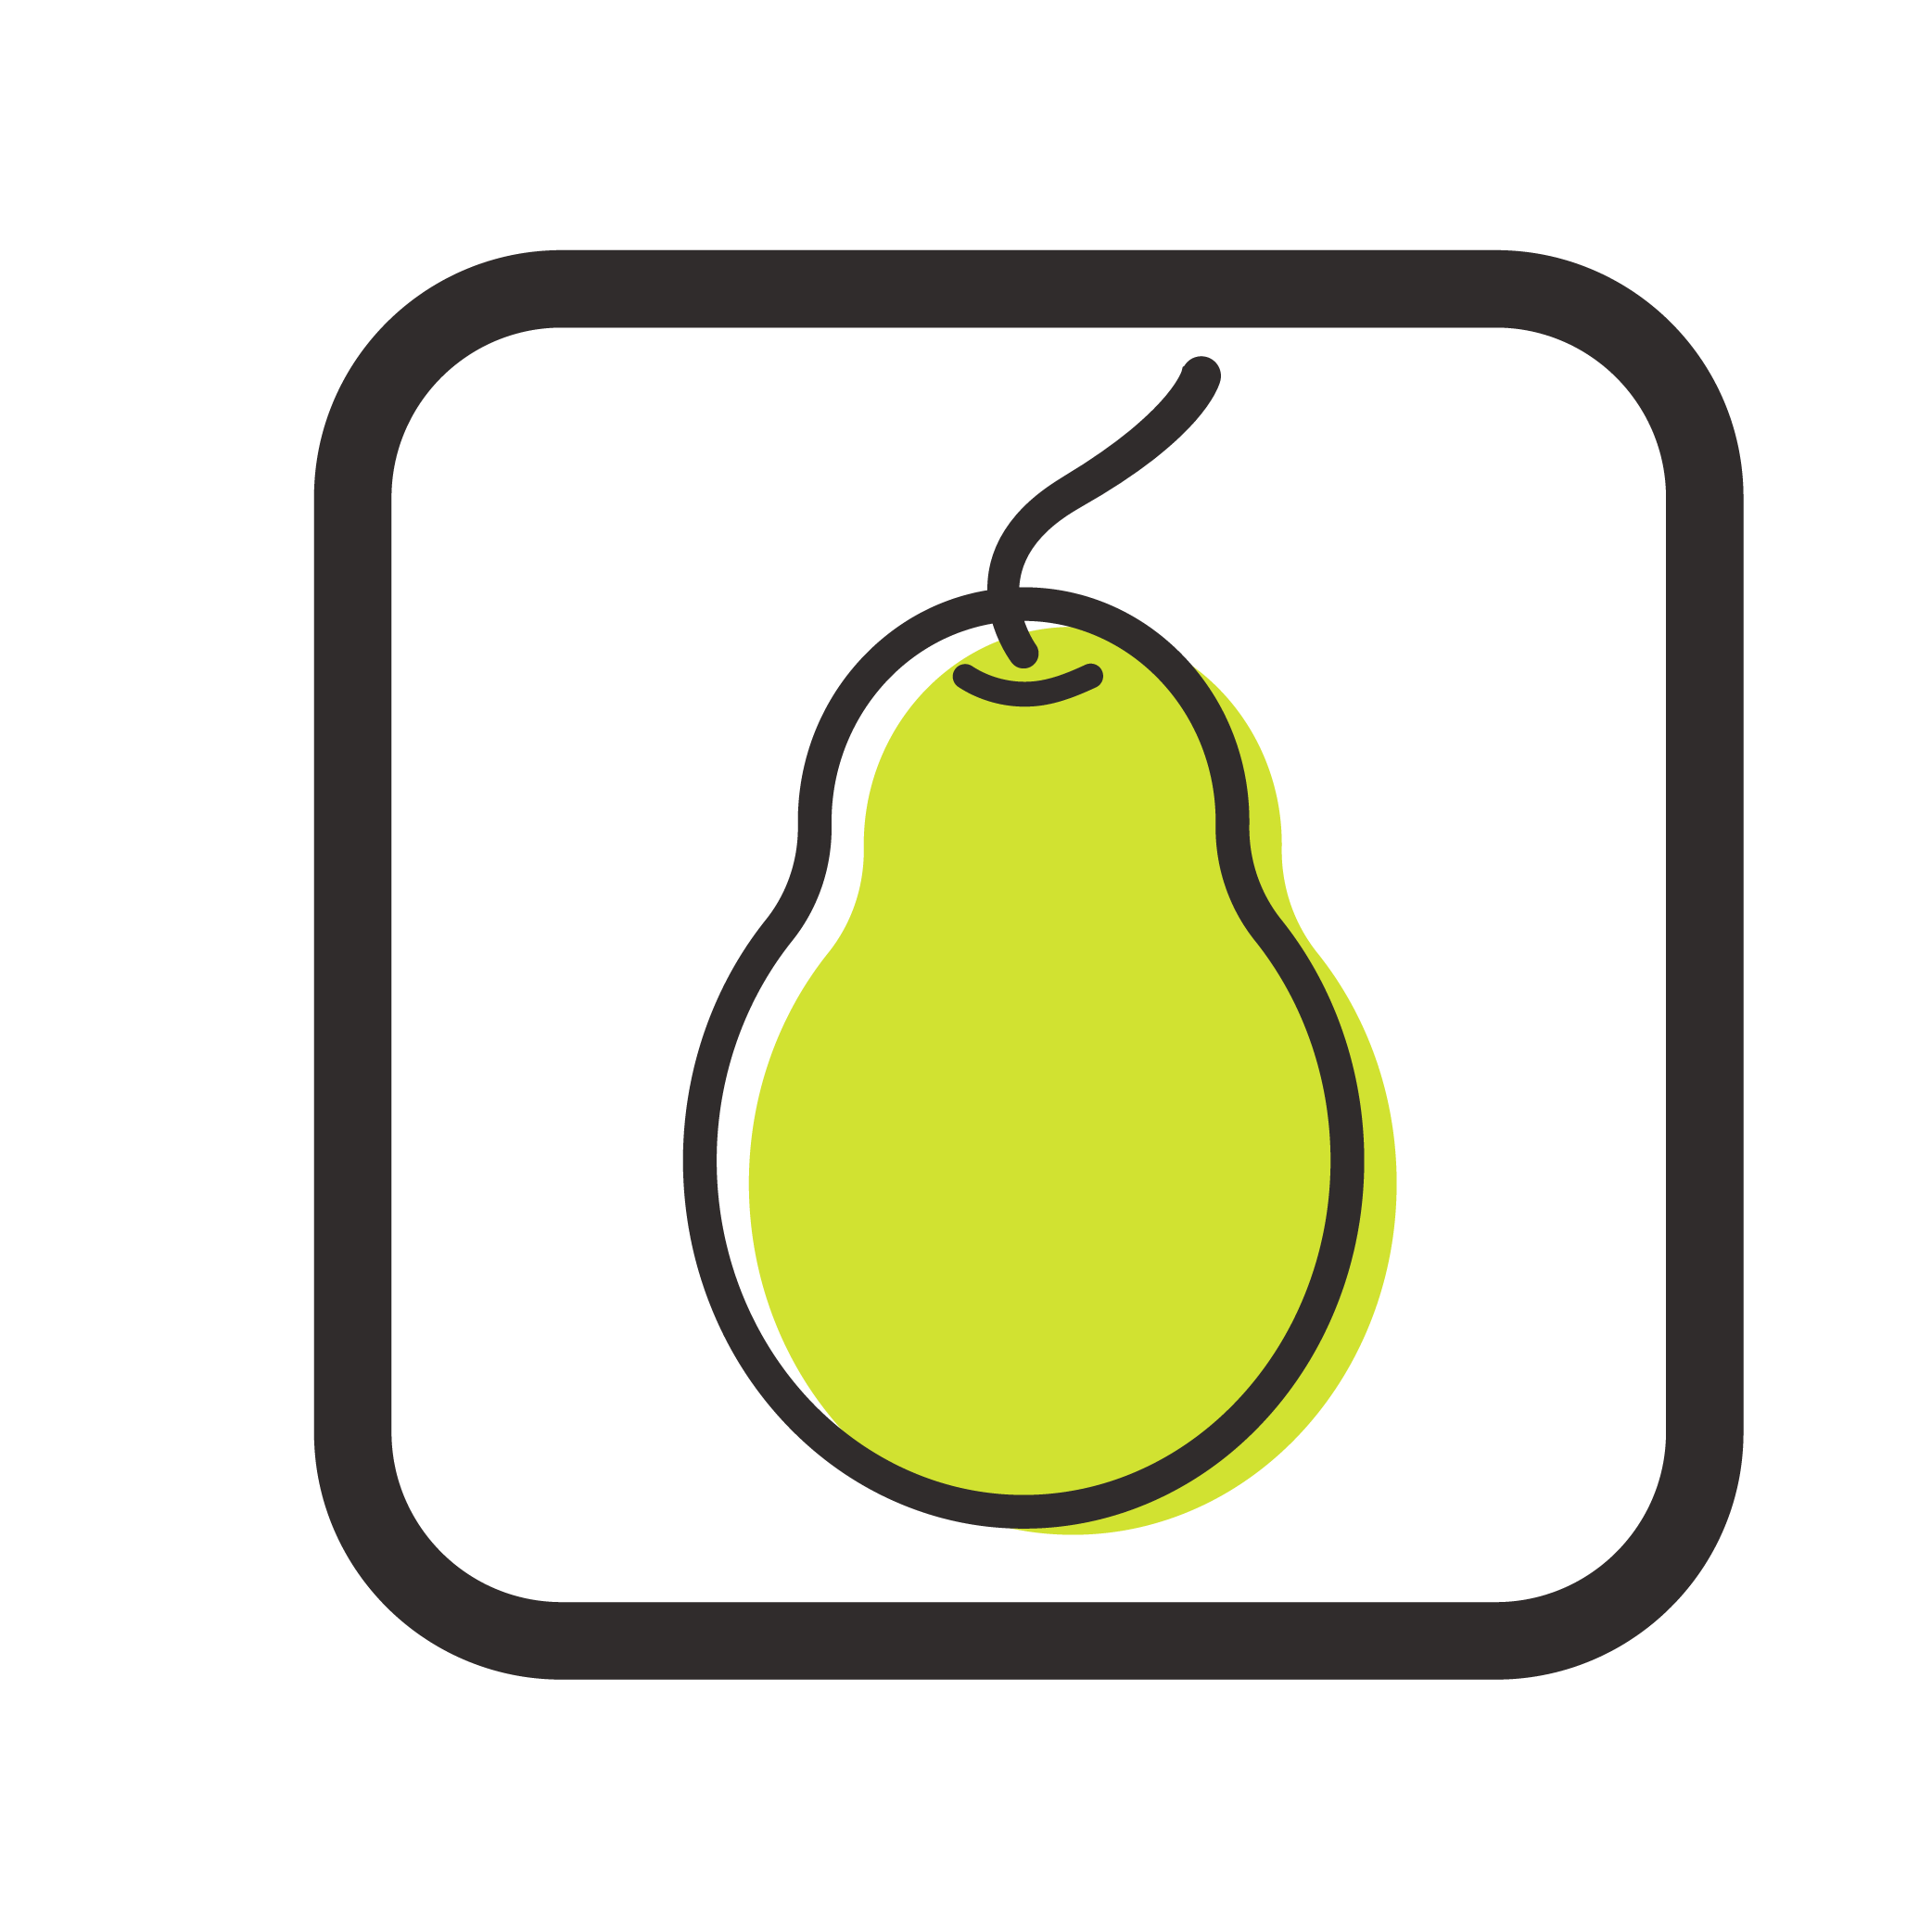 frut icons 04 402